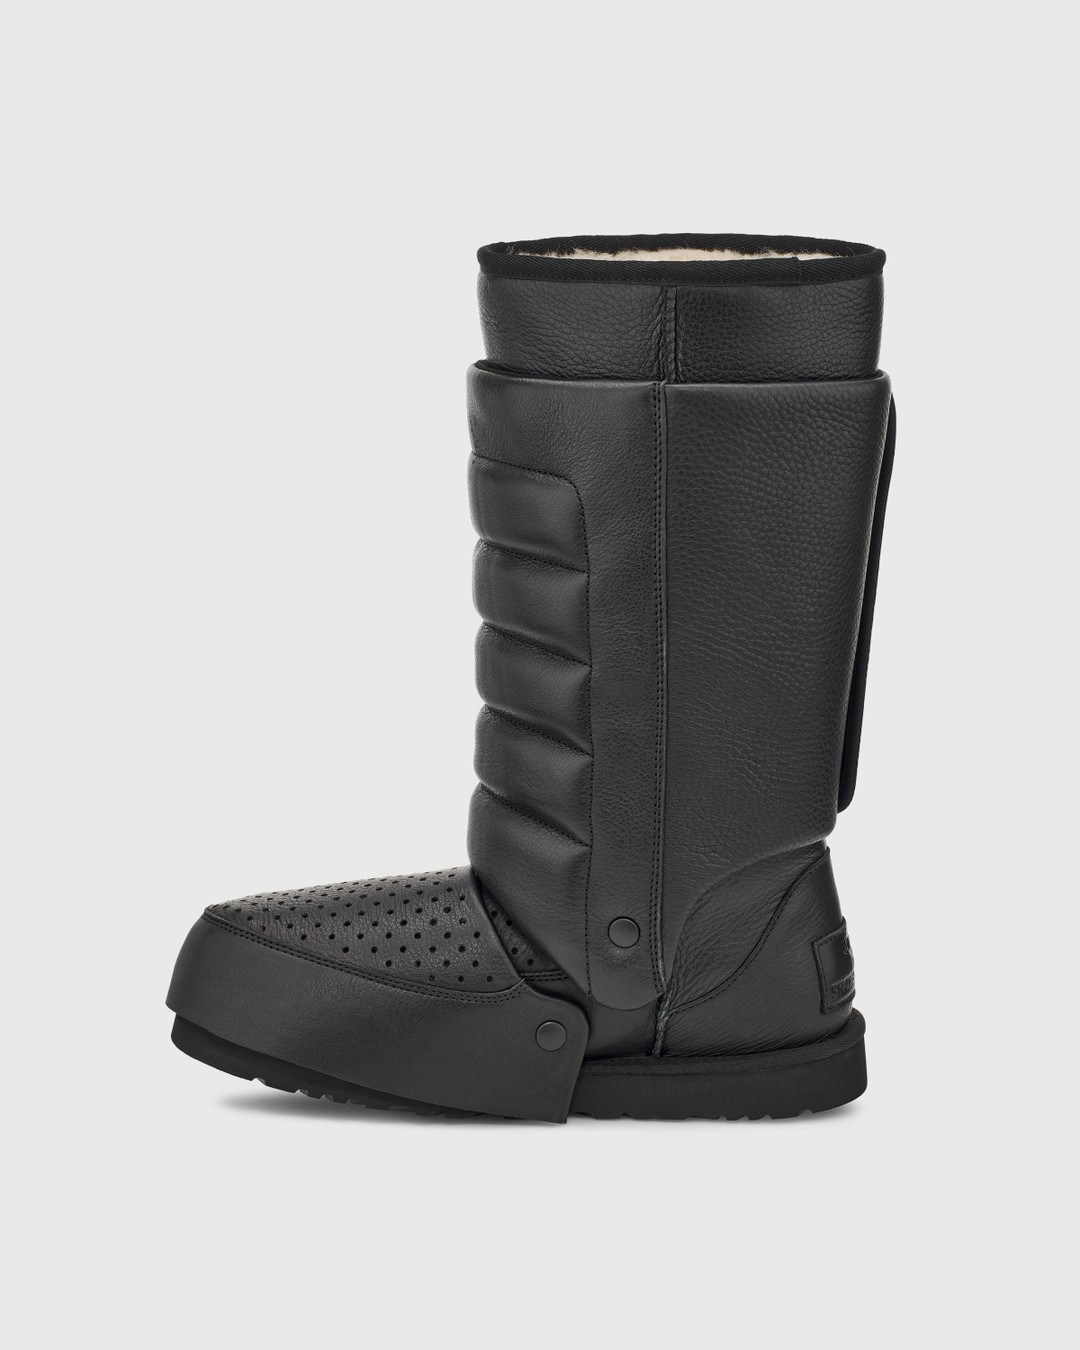 Ugg x Shayne Oliver – Tall Boot Black - Lined Boots - Black - Image 2